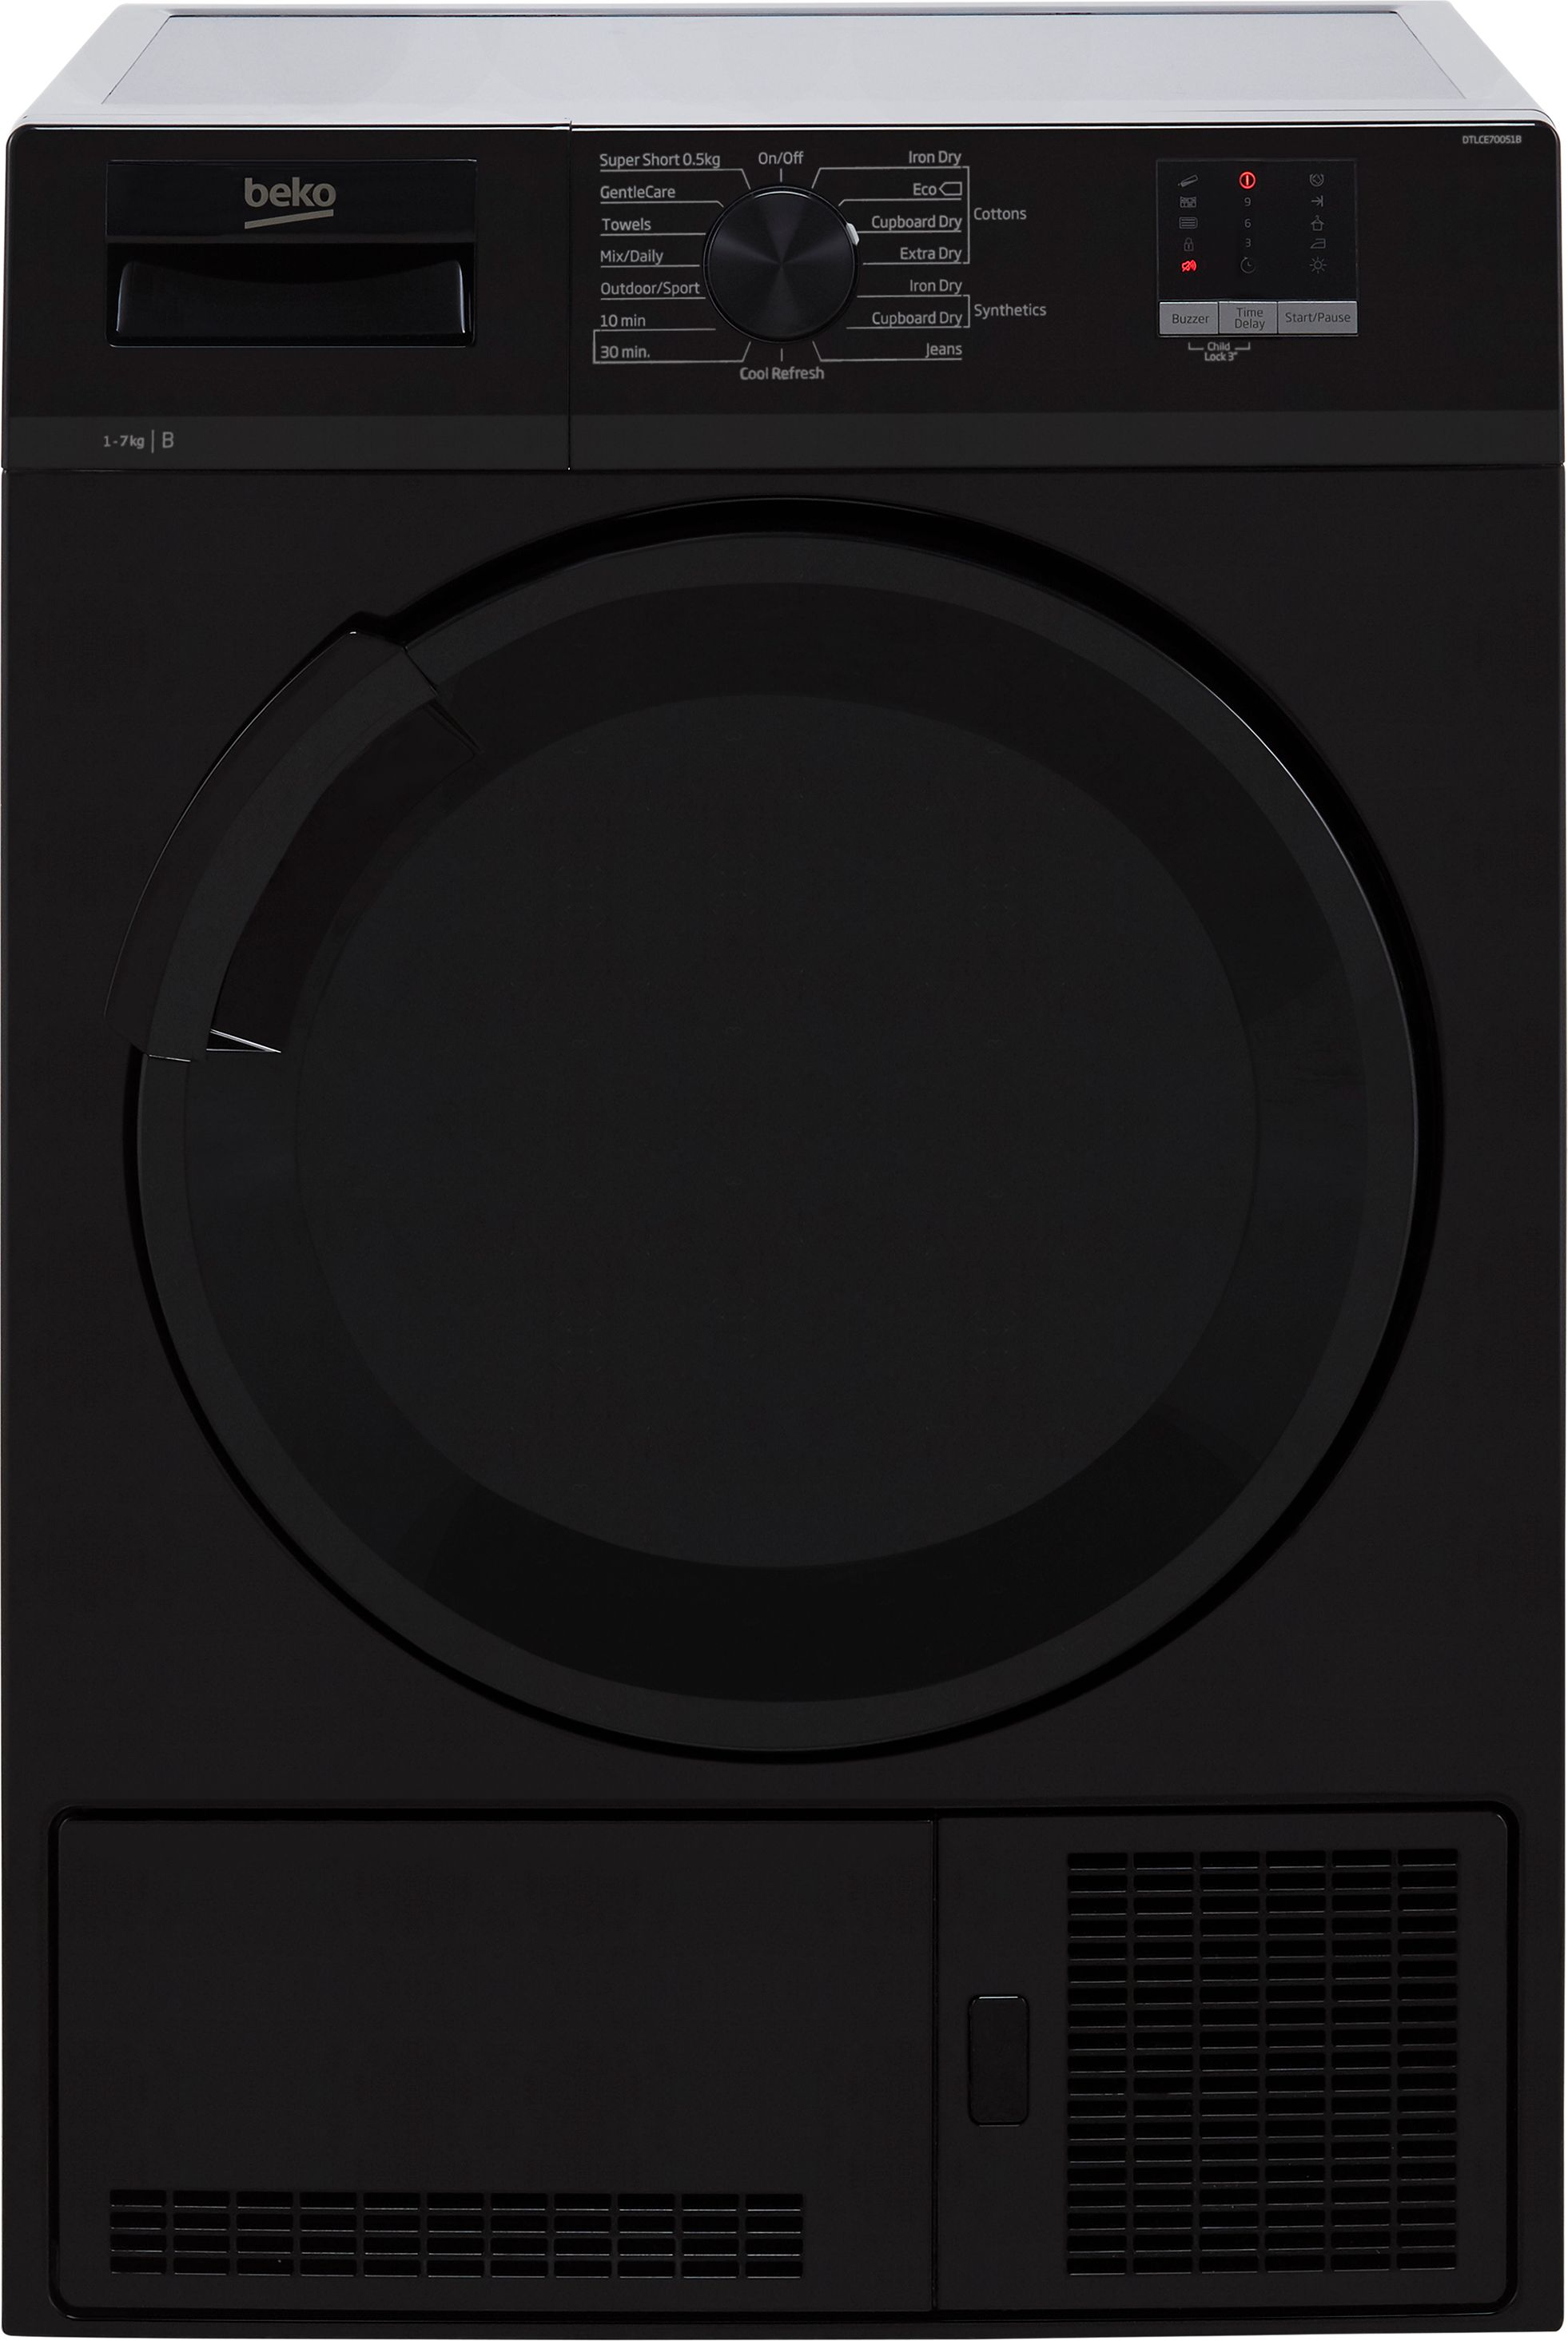 Beko DTLCE70051B 7Kg Condenser Tumble Dryer - Black - B Rated, Black